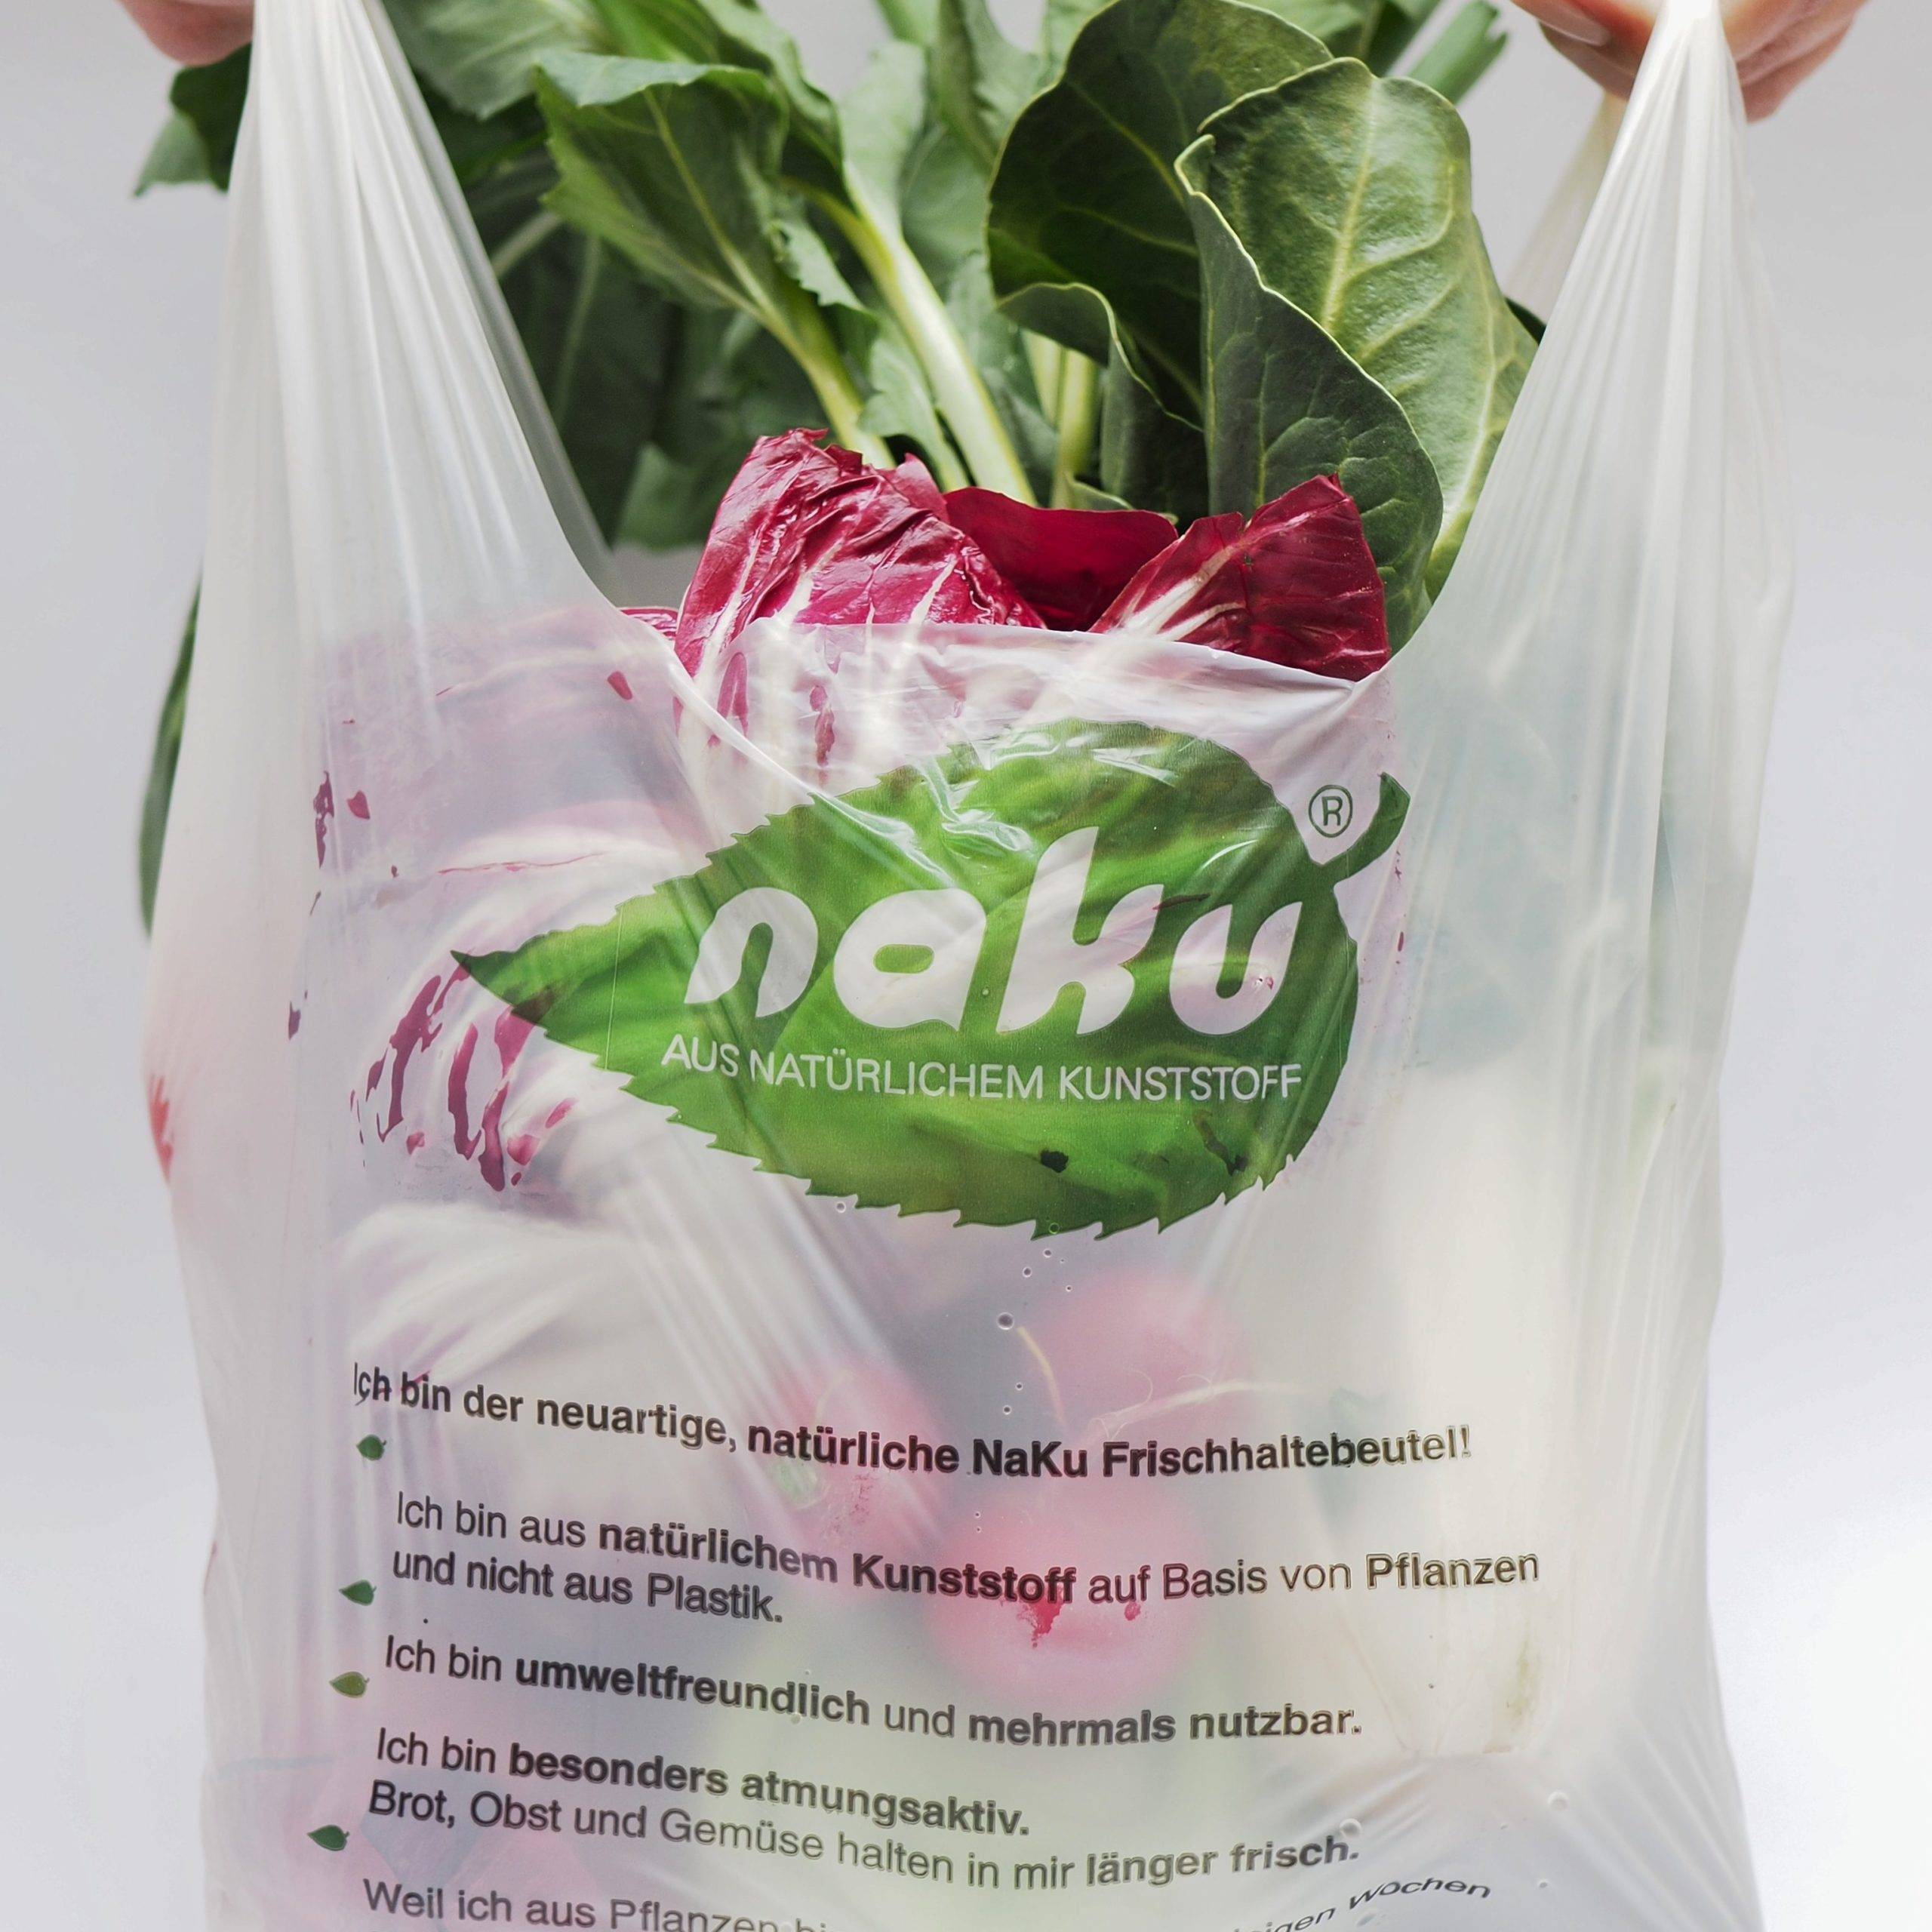 NaKu Bio-Sackerl, Bio-Beutel, Bio-Tüten aus Biokunststoff. Kompostierbar & recyclebar.